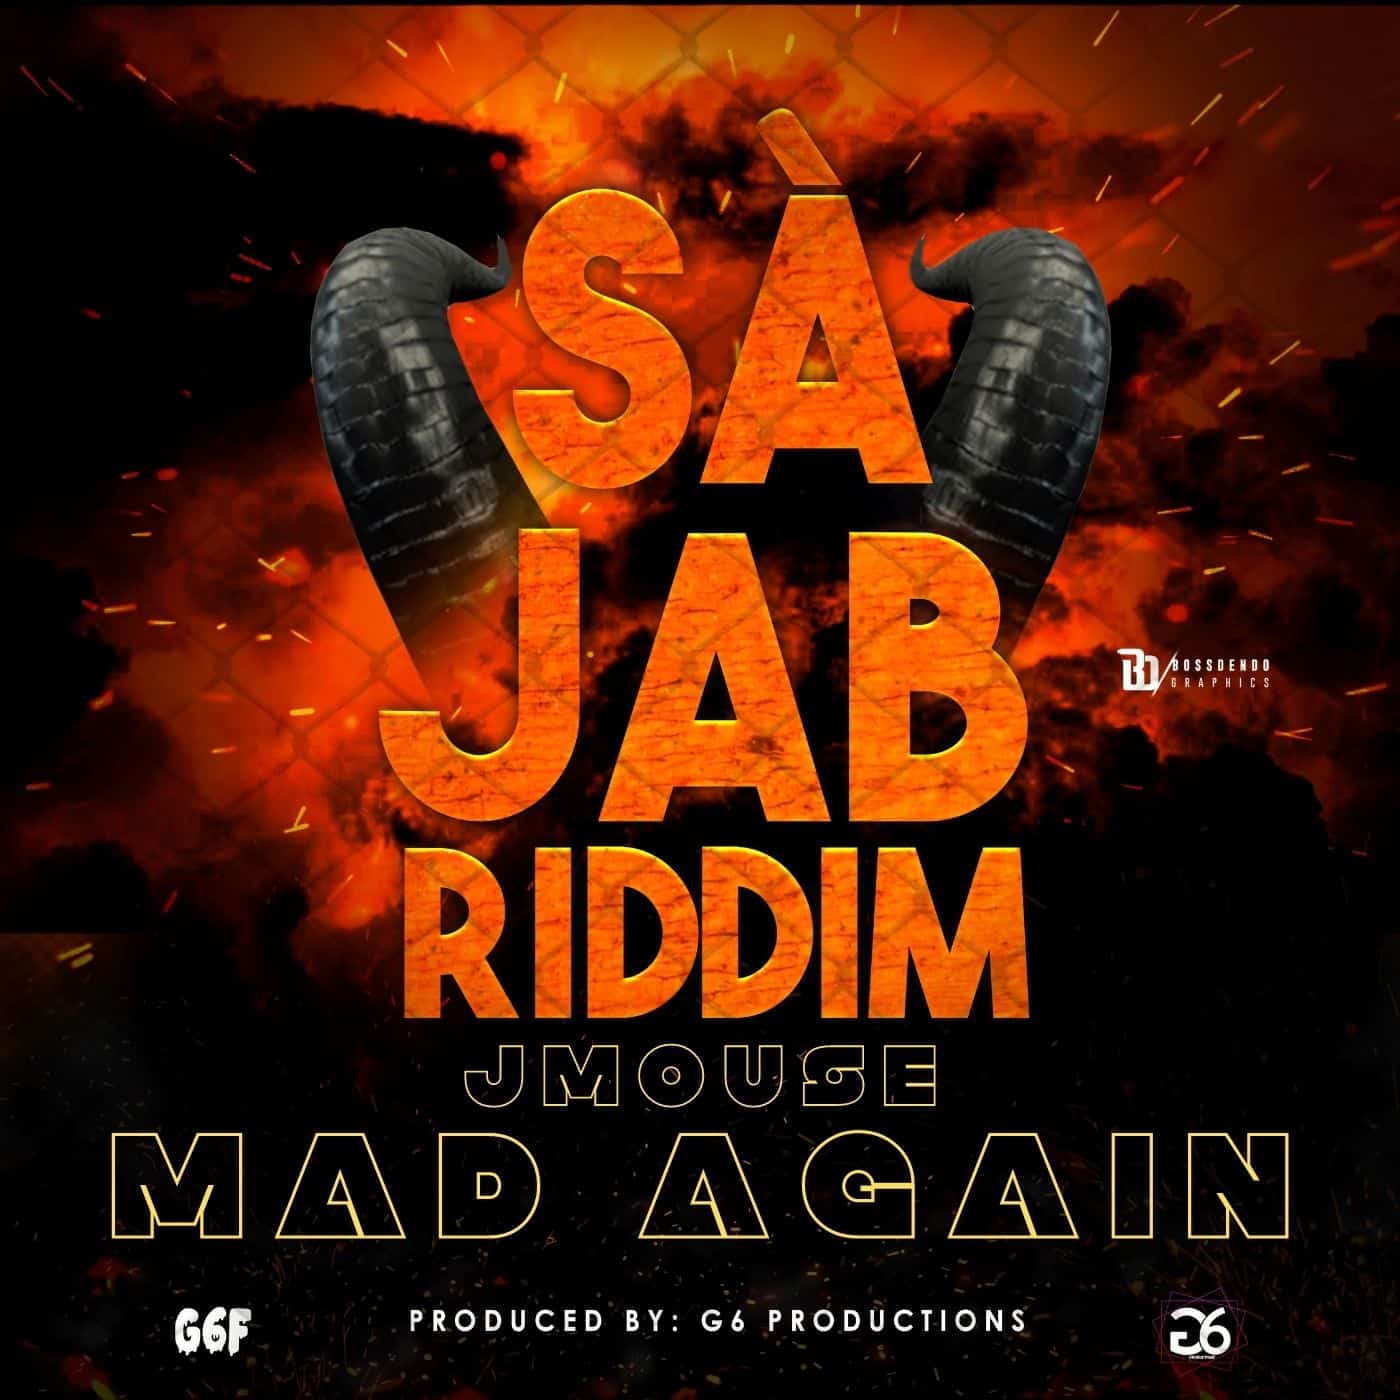 JMouse - Mad Again - Sa Jab Riddim